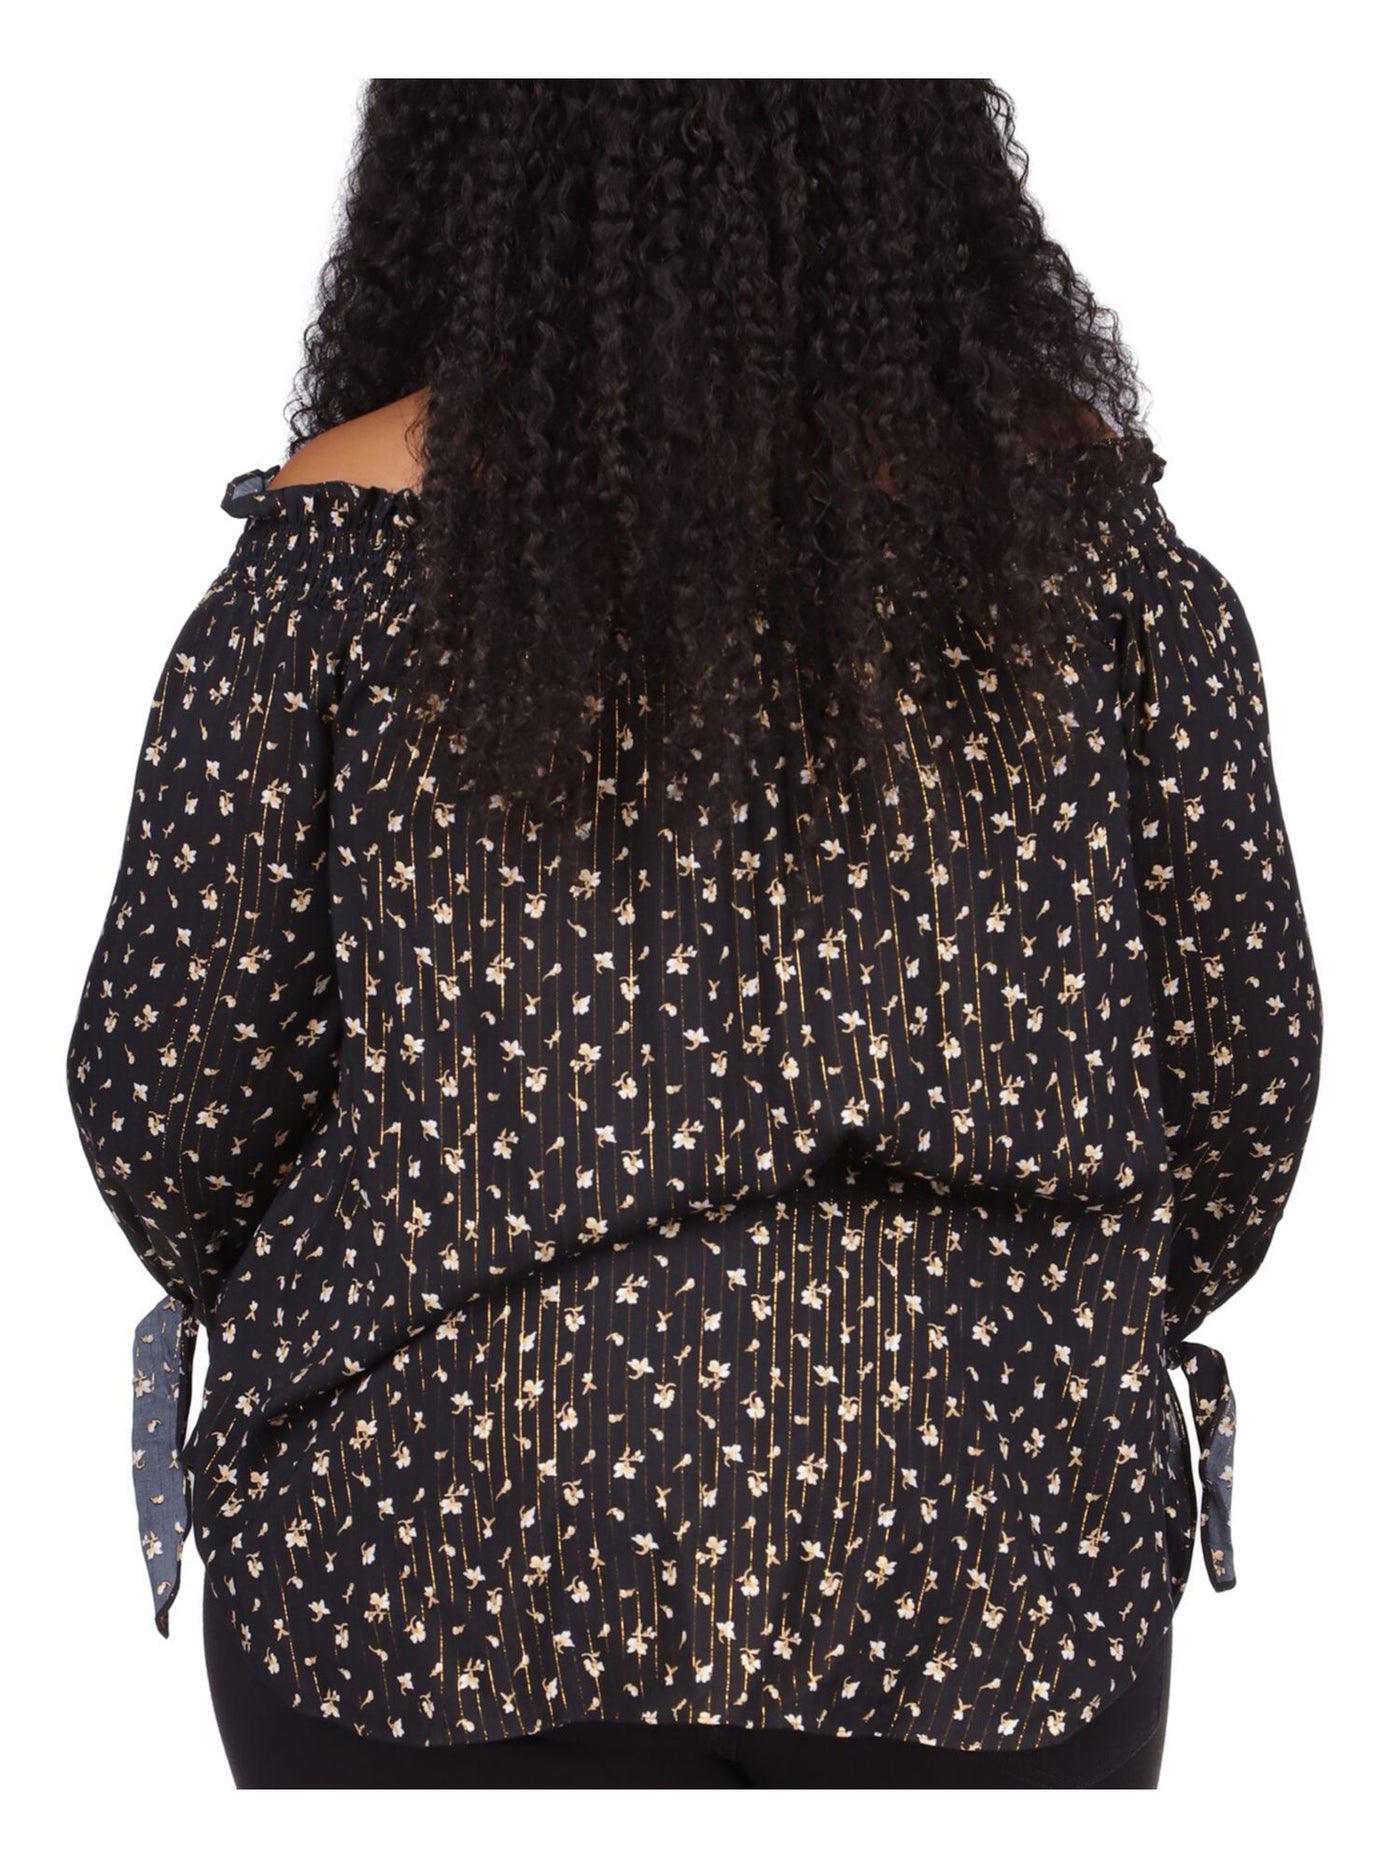 MICHAEL KORS Womens Black Smocked Sheer Pullover Unlined Tie Curved Hem Floral 3/4 Sleeve Off Shoulder Top Plus 1X